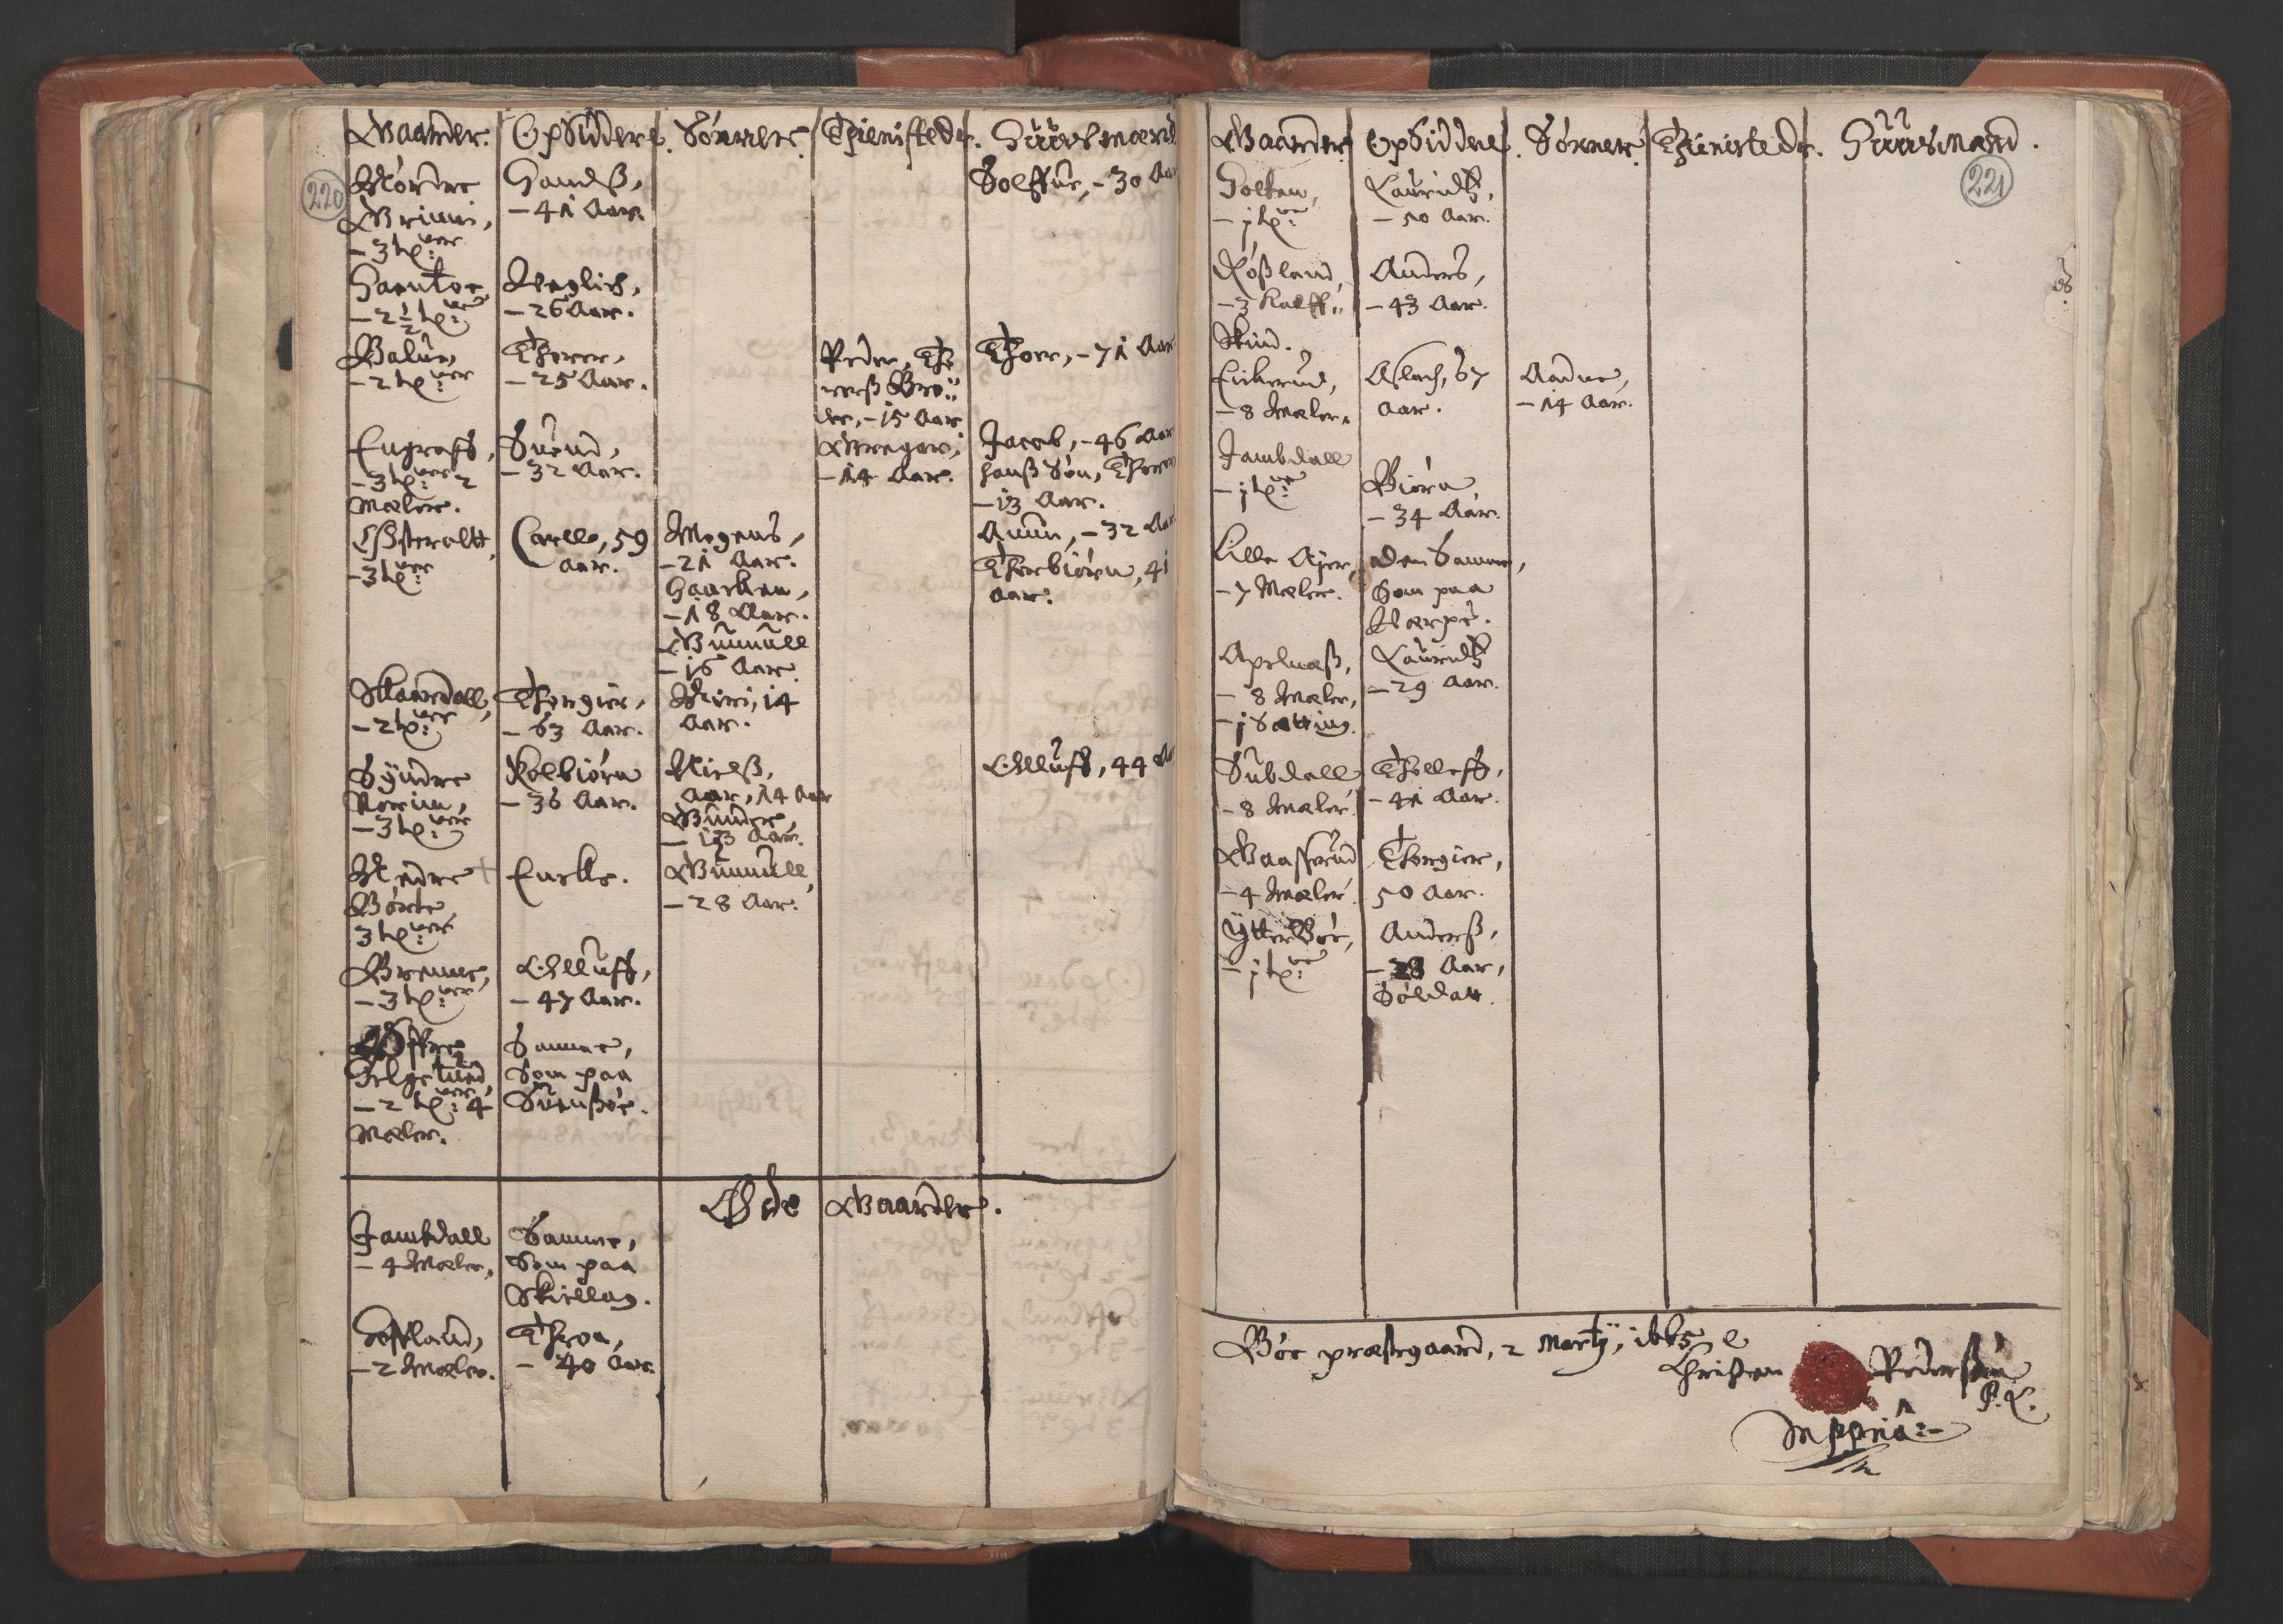 RA, Vicar's Census 1664-1666, no. 12: Øvre Telemark deanery, Nedre Telemark deanery and Bamble deanery, 1664-1666, p. 220-221